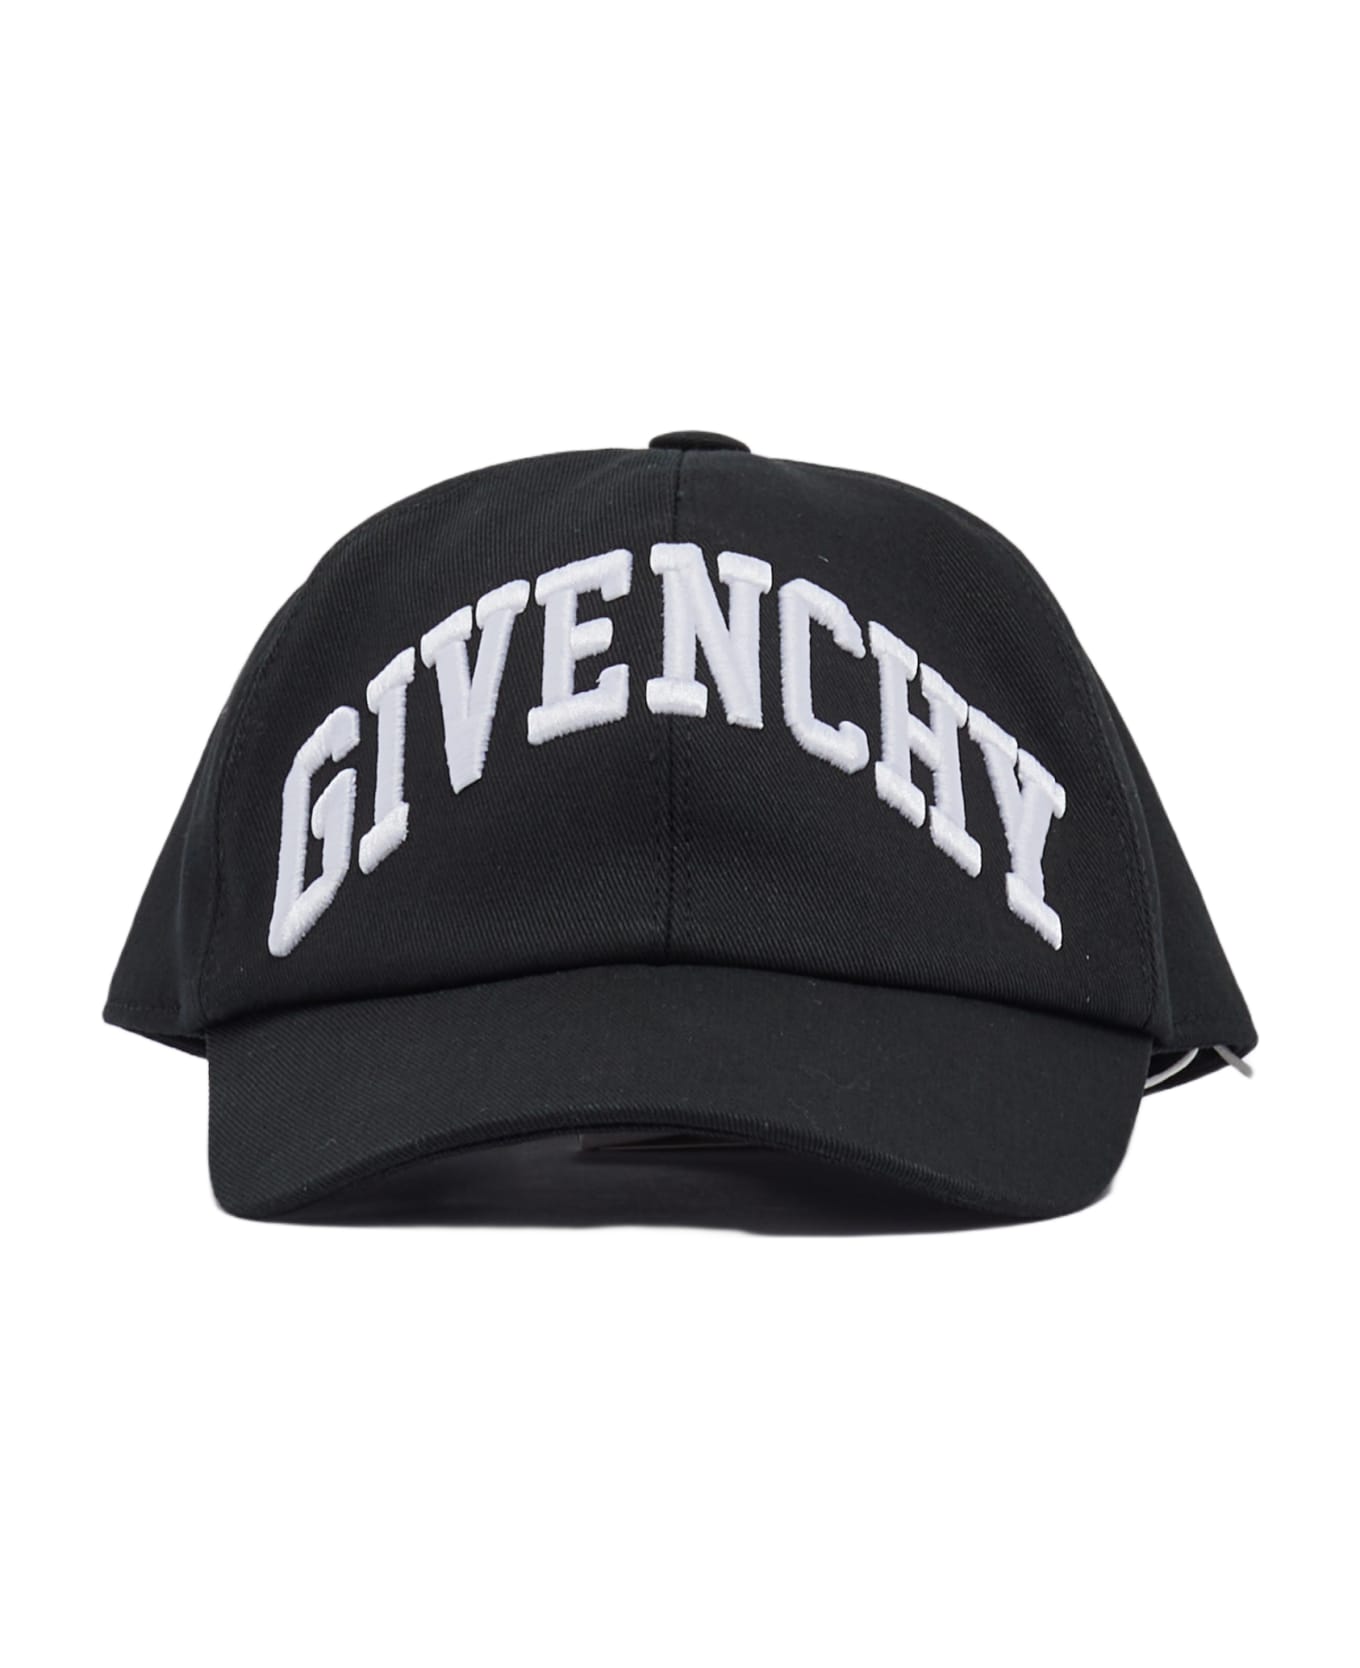 Givenchy Baseball Cap Cap - NERO